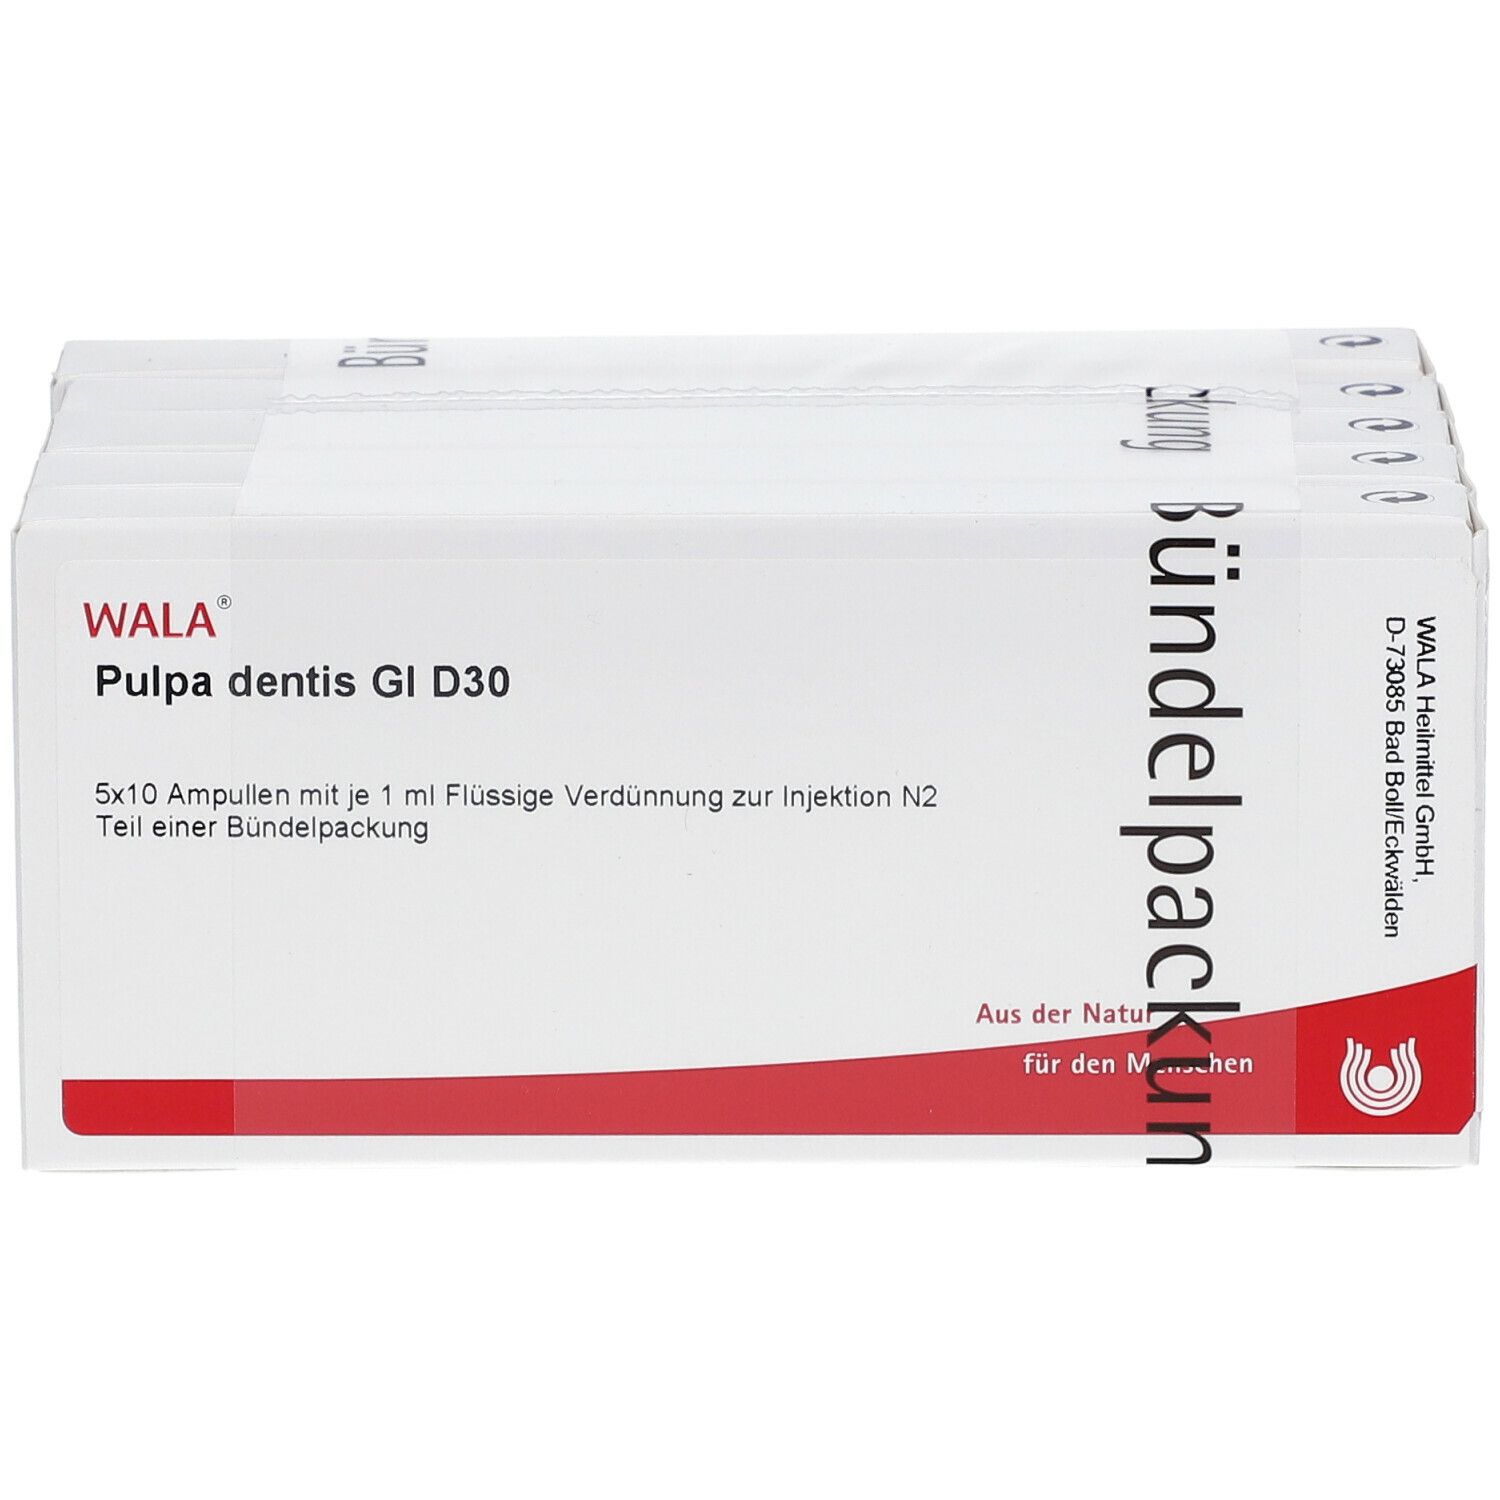 WALA® Pulpa dentis Gl D 30